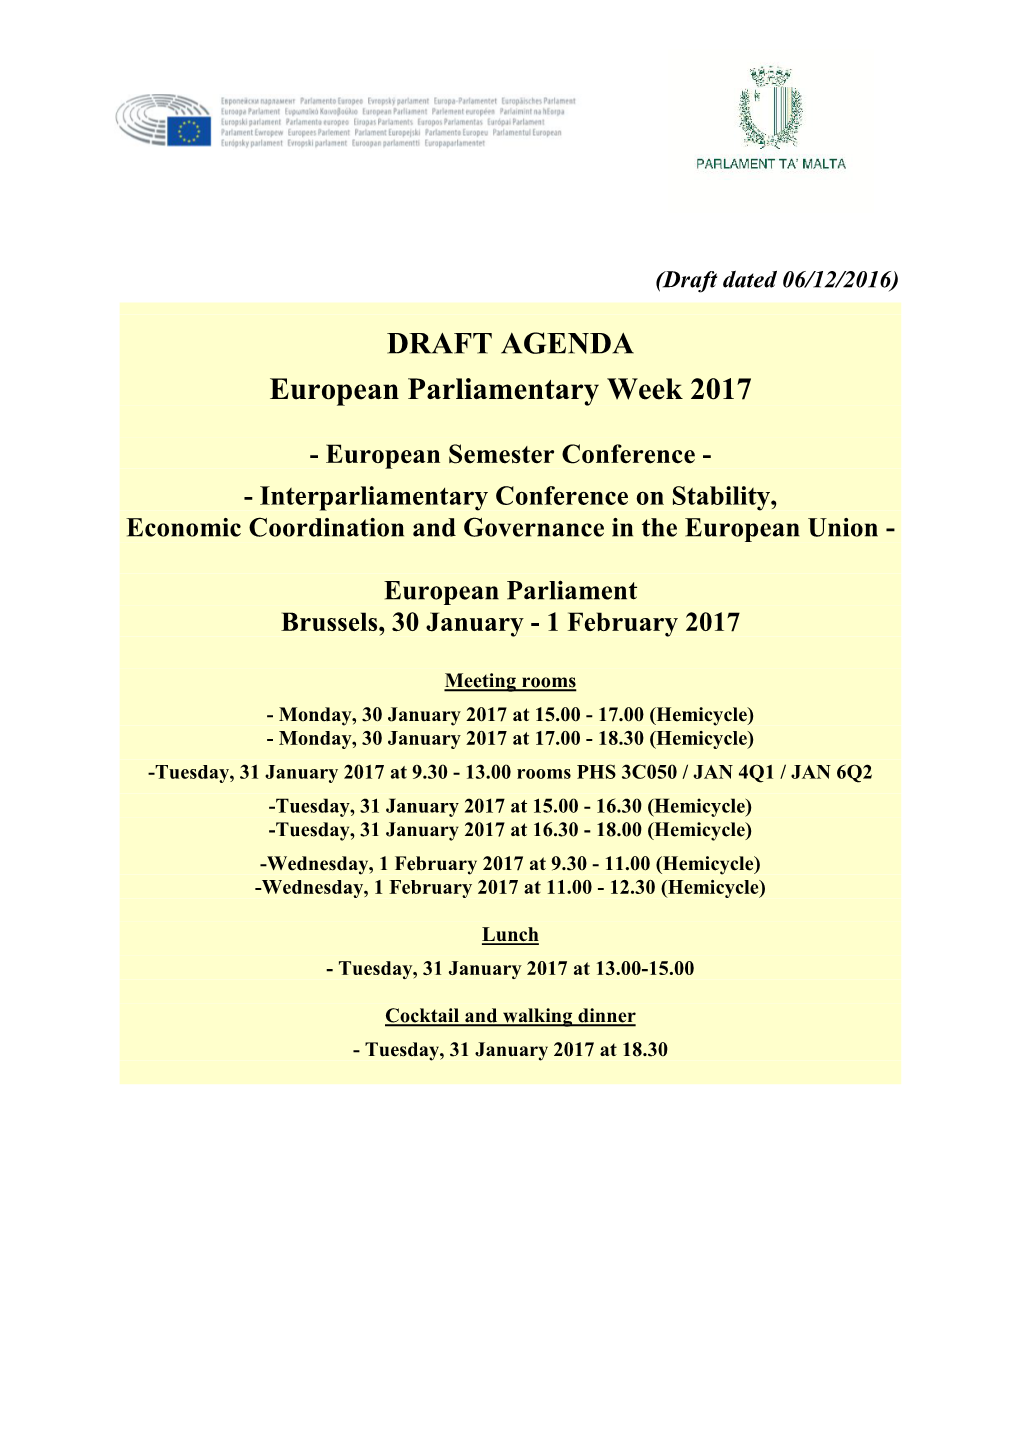 DRAFT AGENDA European Parliamentary Week 2017